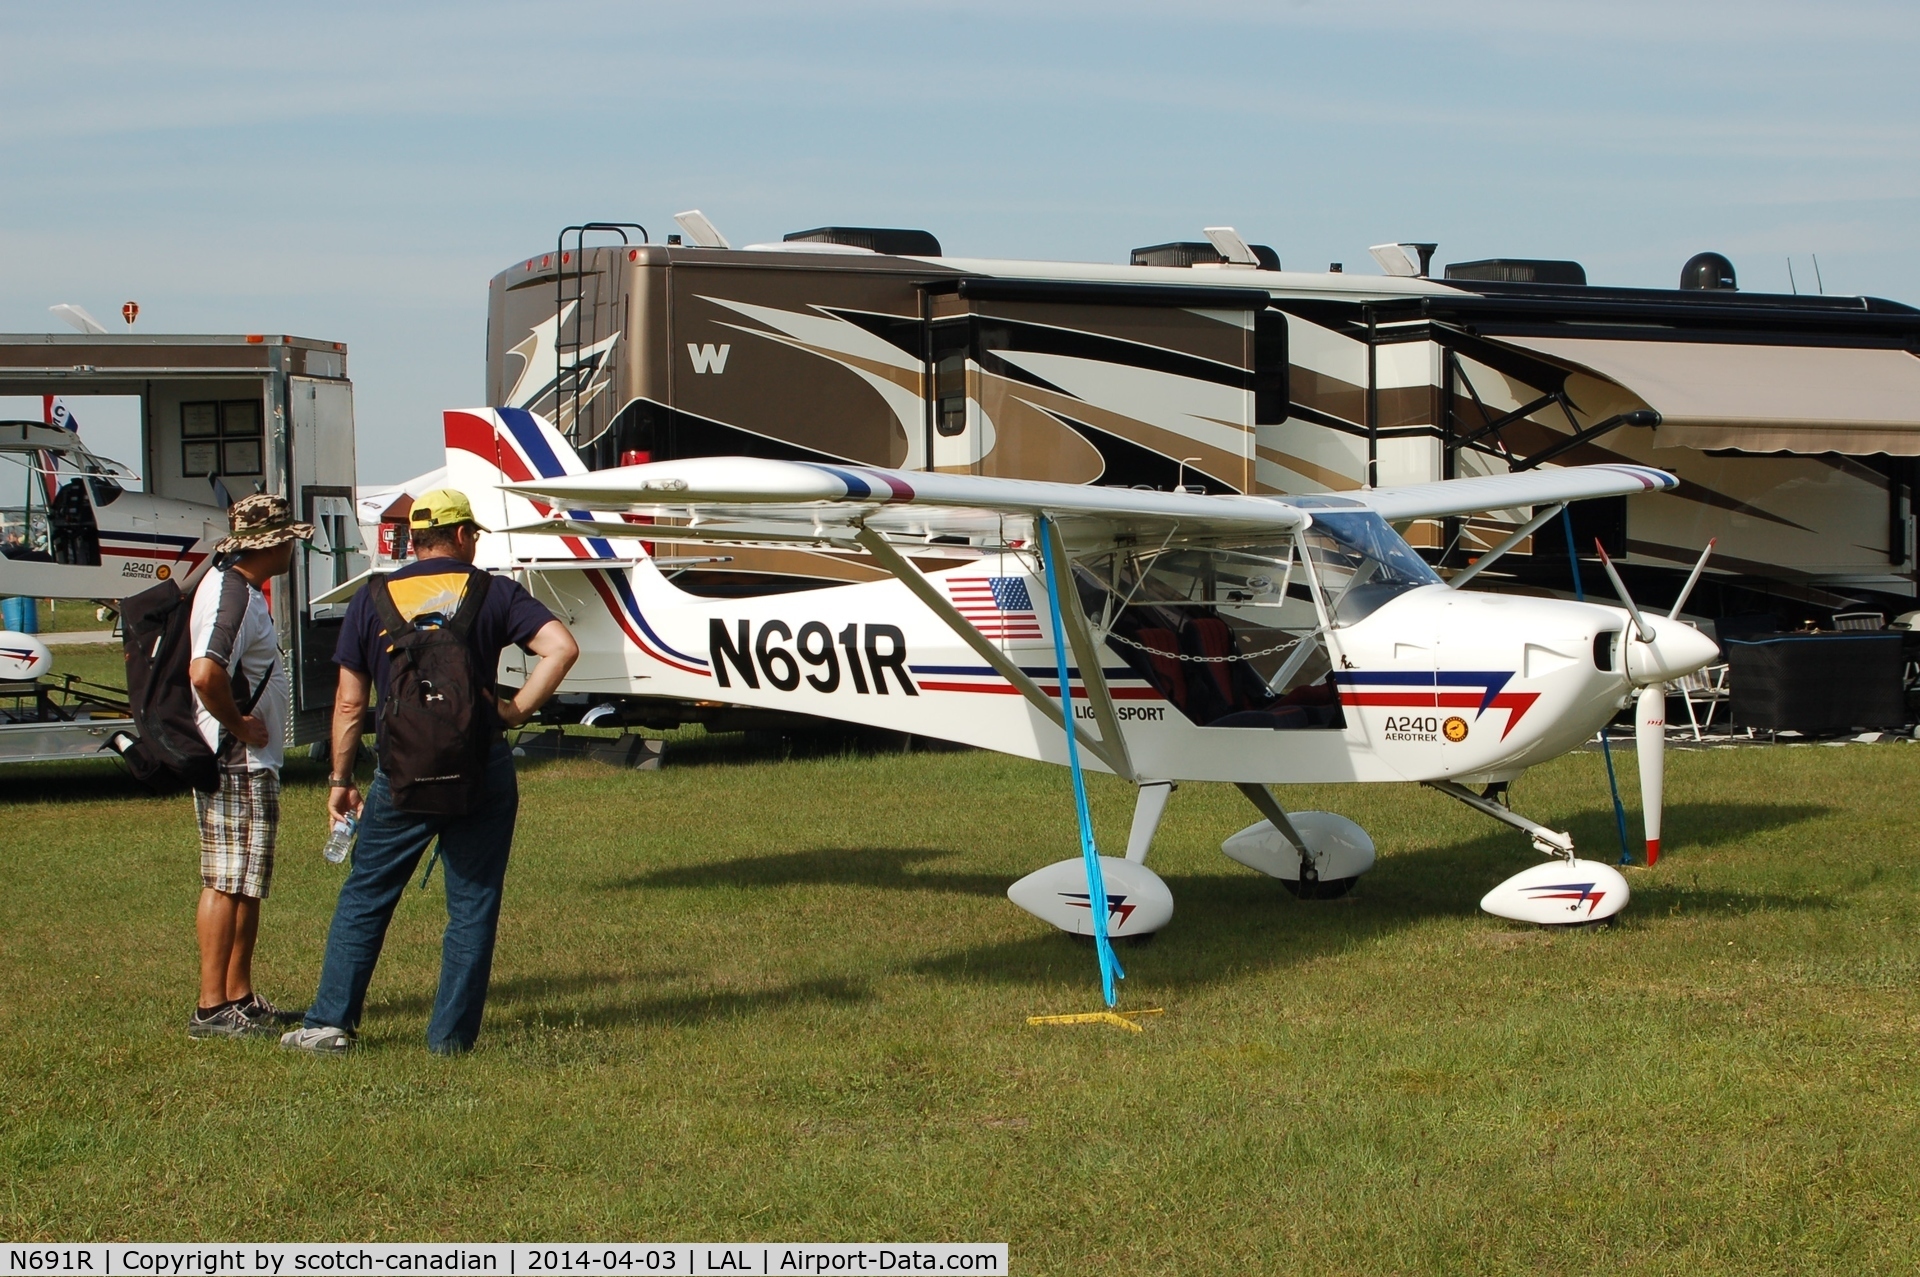 N691R, Aeropro Eurofox LSA 3K C/N 27809, Aerotrek A240, N691R, at 2014 Sun n Fun, Lakeland Linder Regional Airport, Lakeland, FL